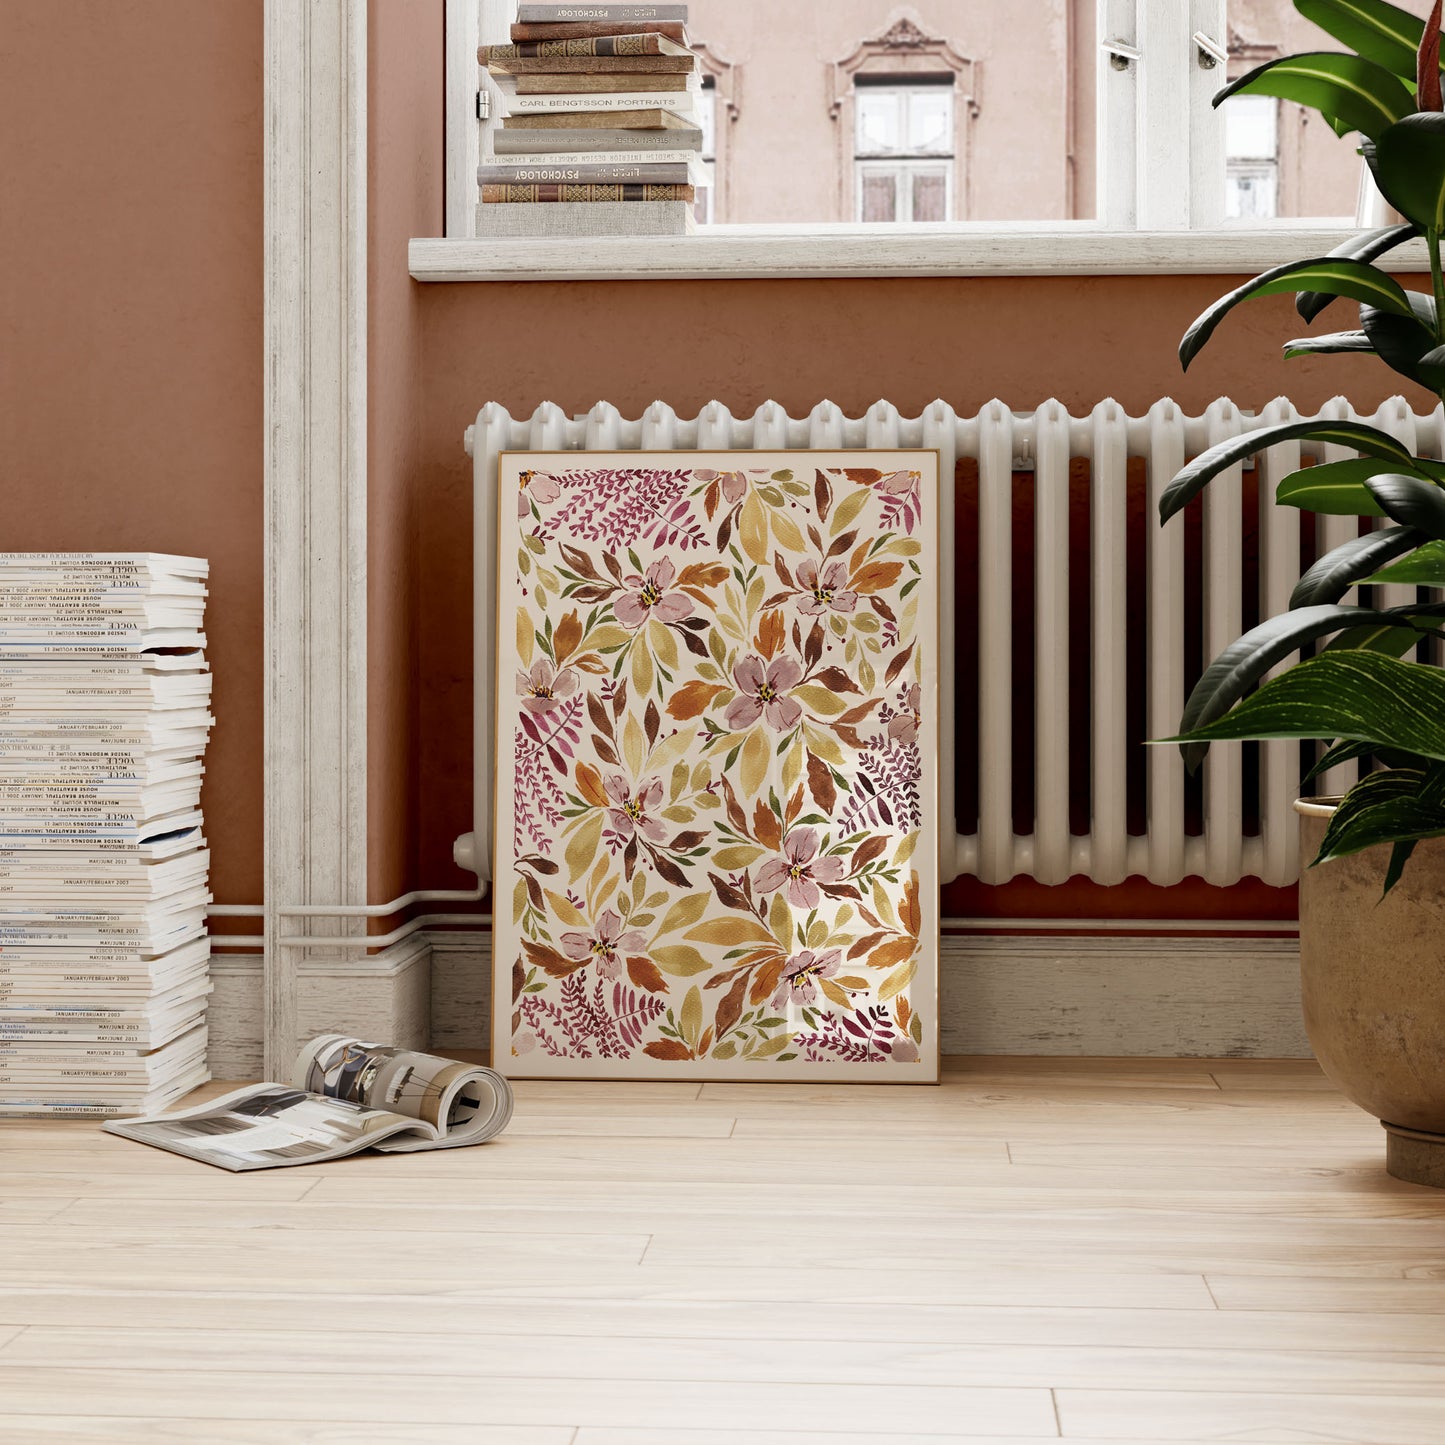 autumnal floral patterned wall art for living room, bathroom, bedroom.